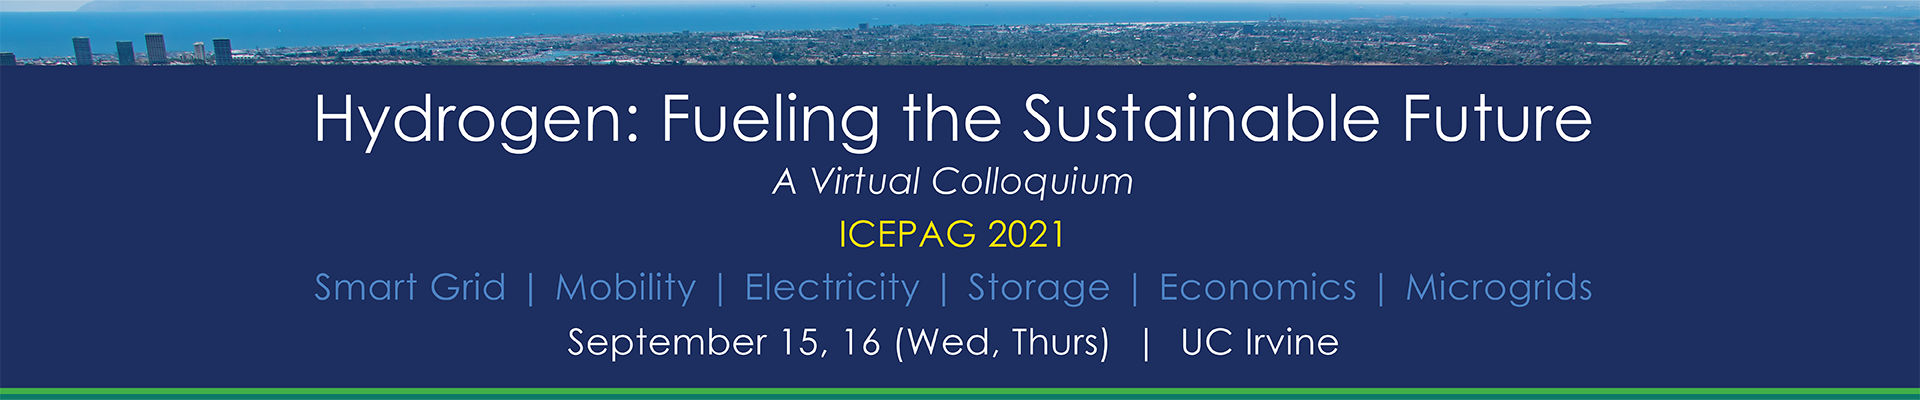 ICEPAG 2021 Hydrogen: A Platform for Sustainability  Header Image